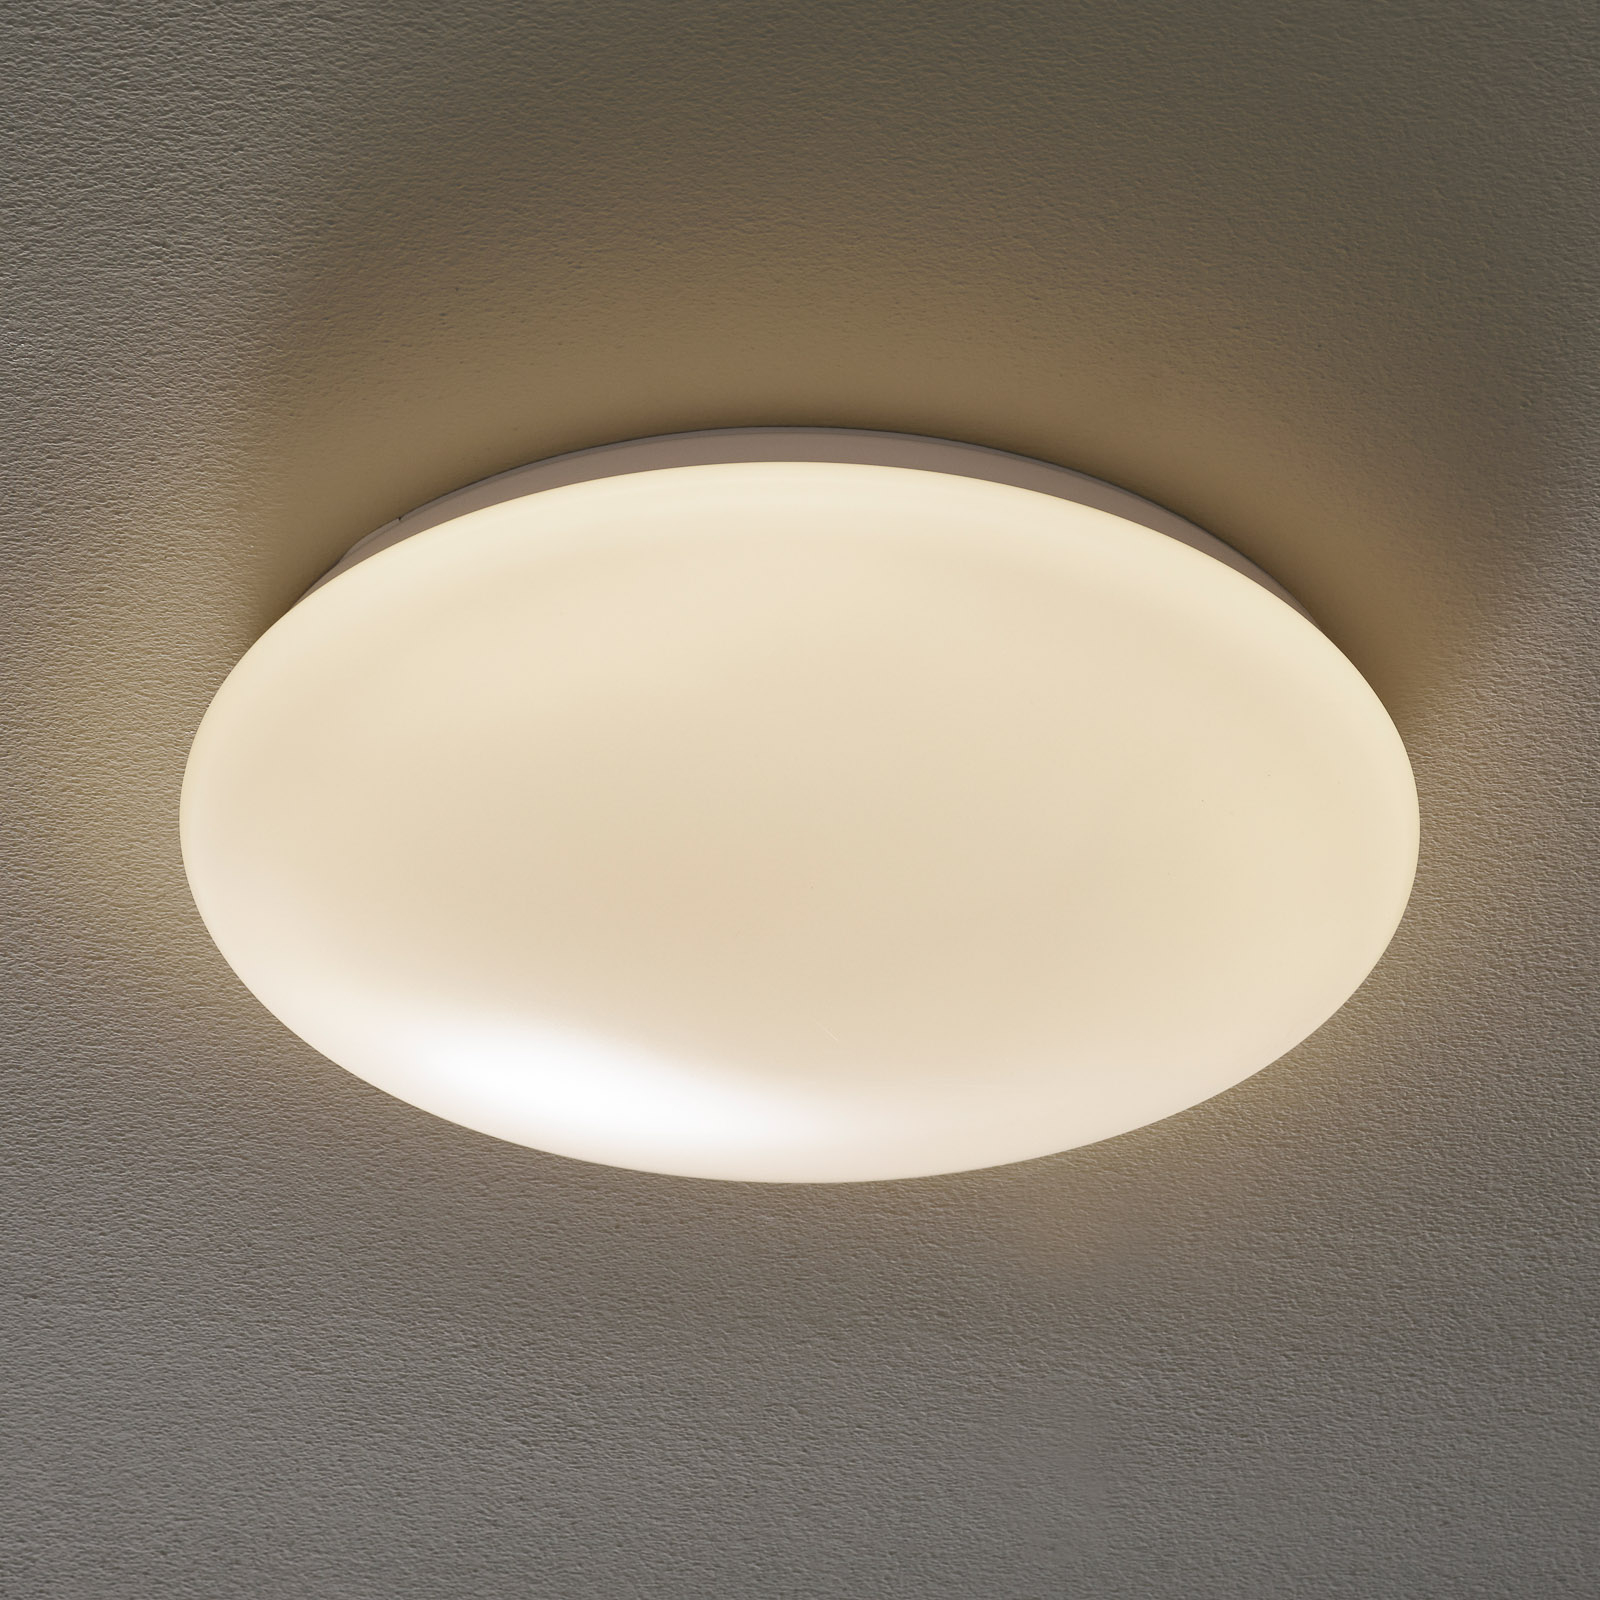 Lampa sufitowa LED Altona LW3 -ciepła biel Ø38,5cm